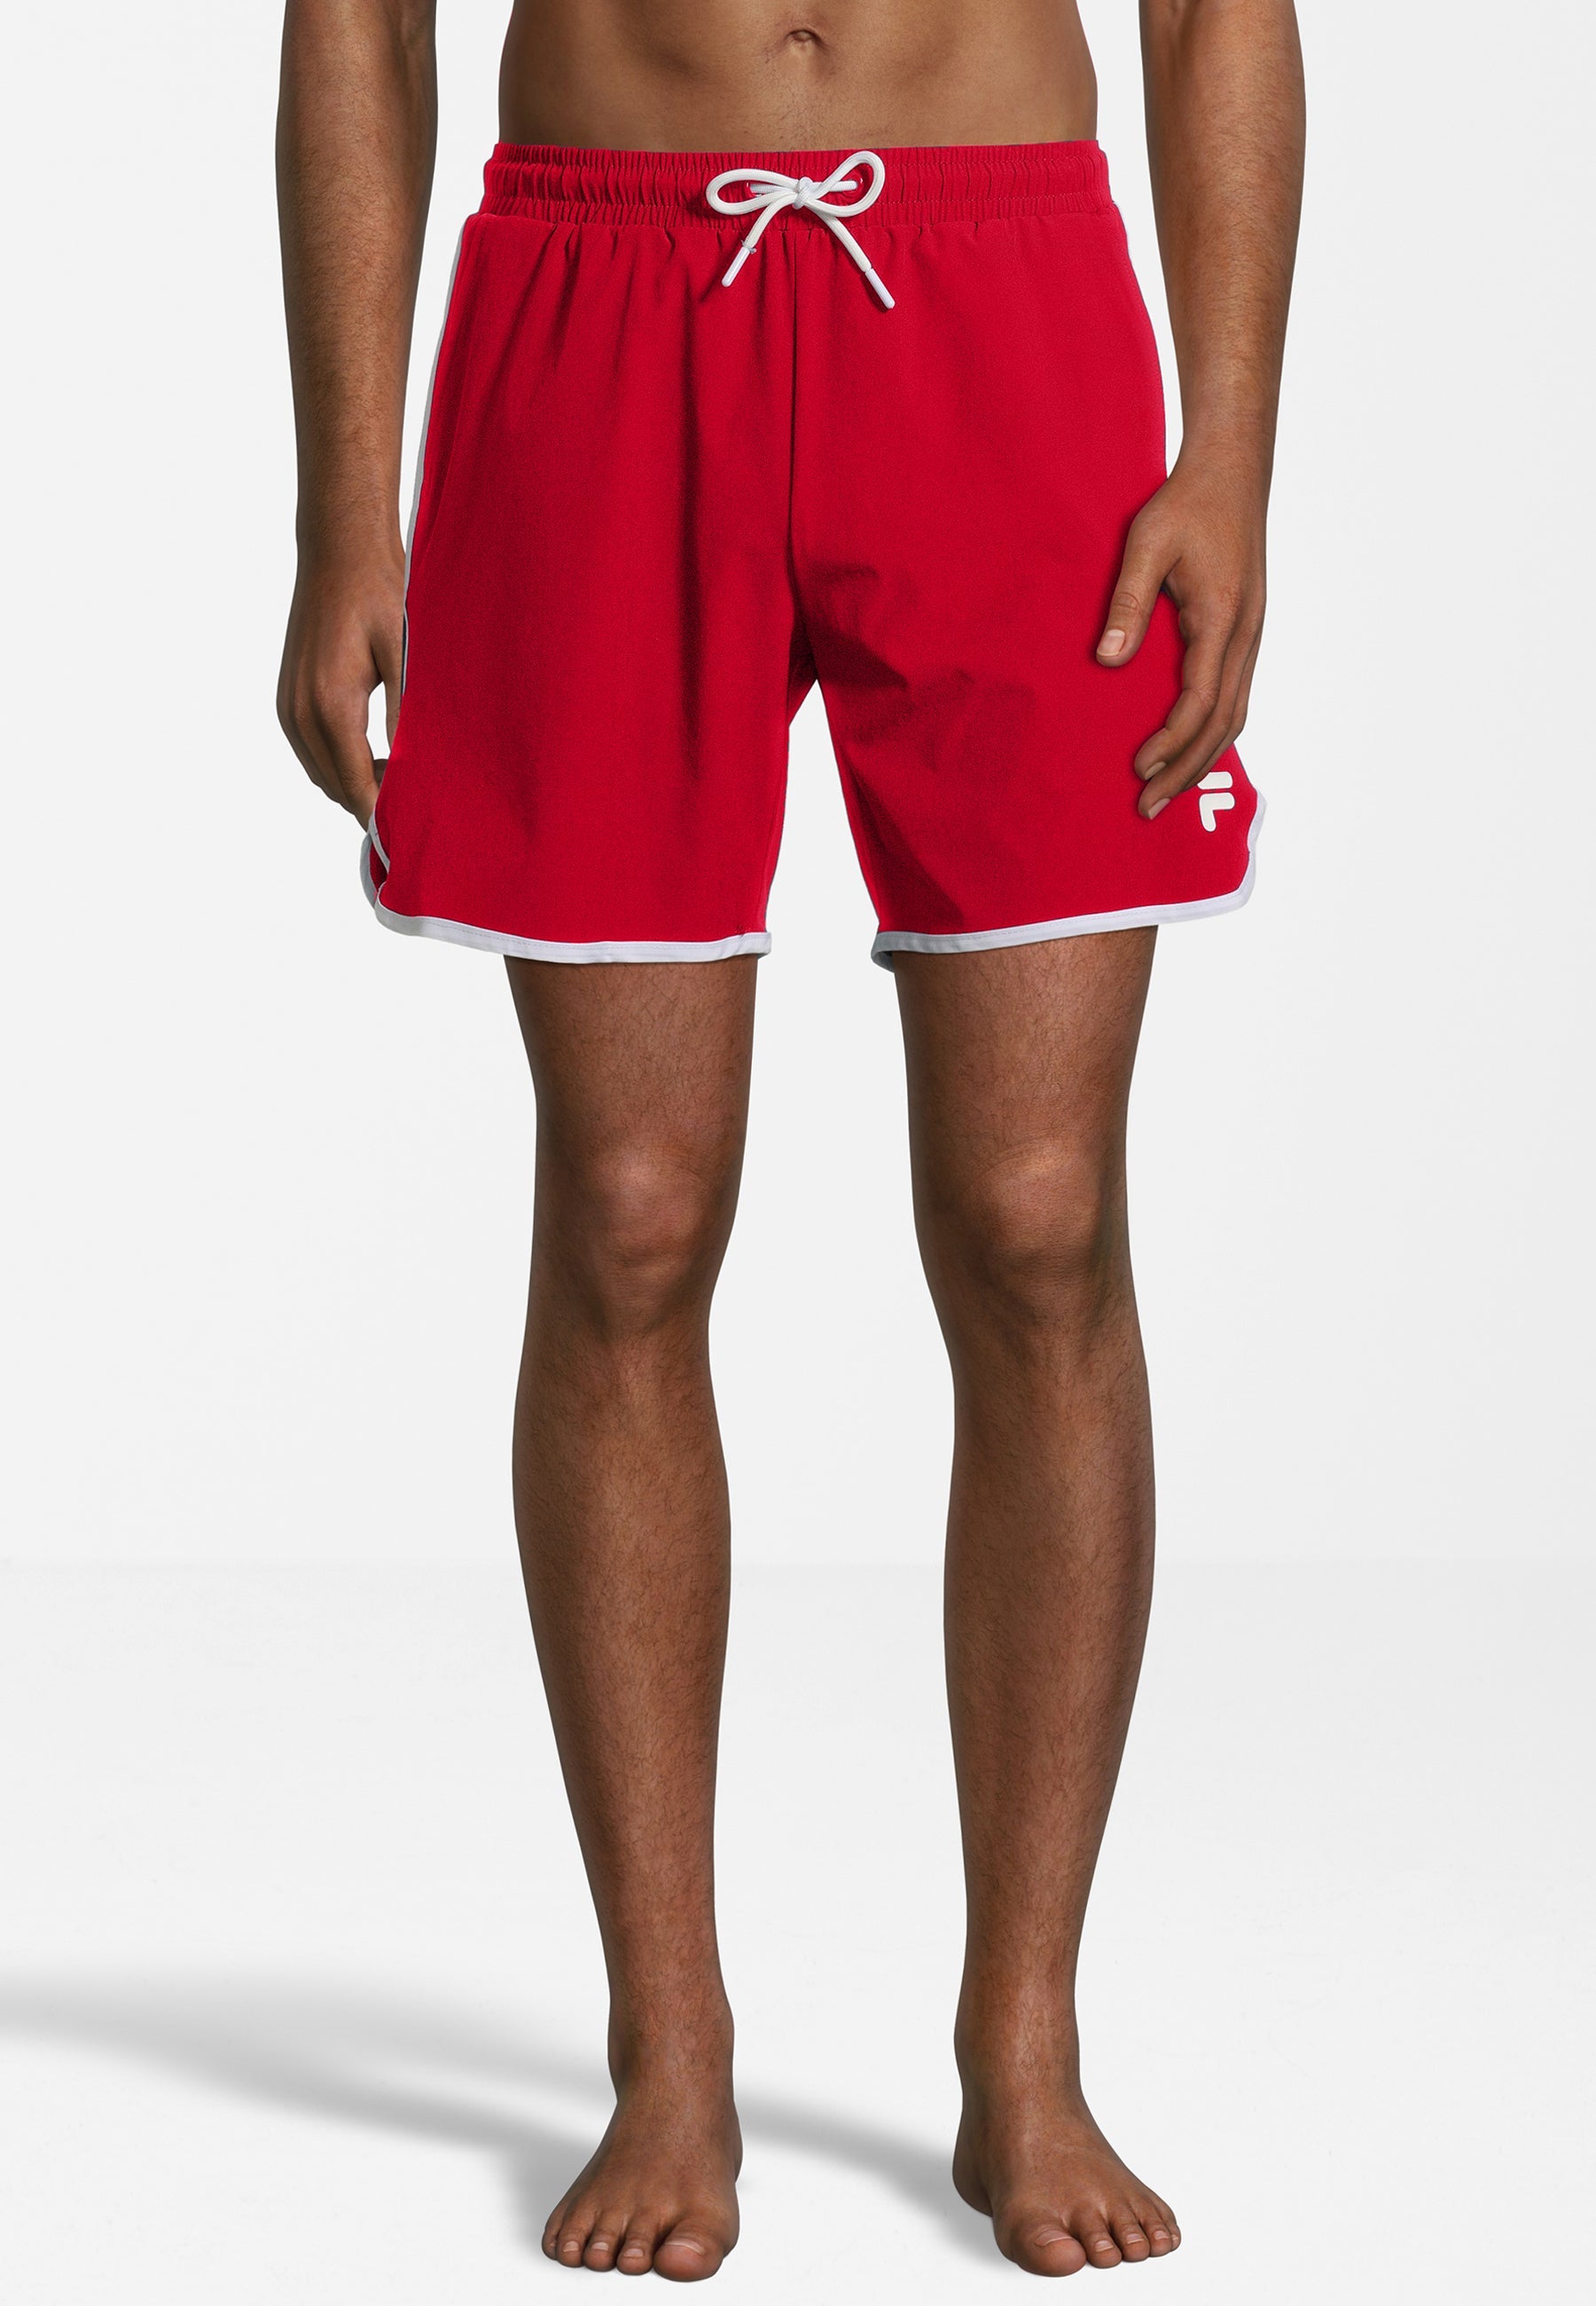 Scilla Beach Shorts in True Red Badehosen Fila   